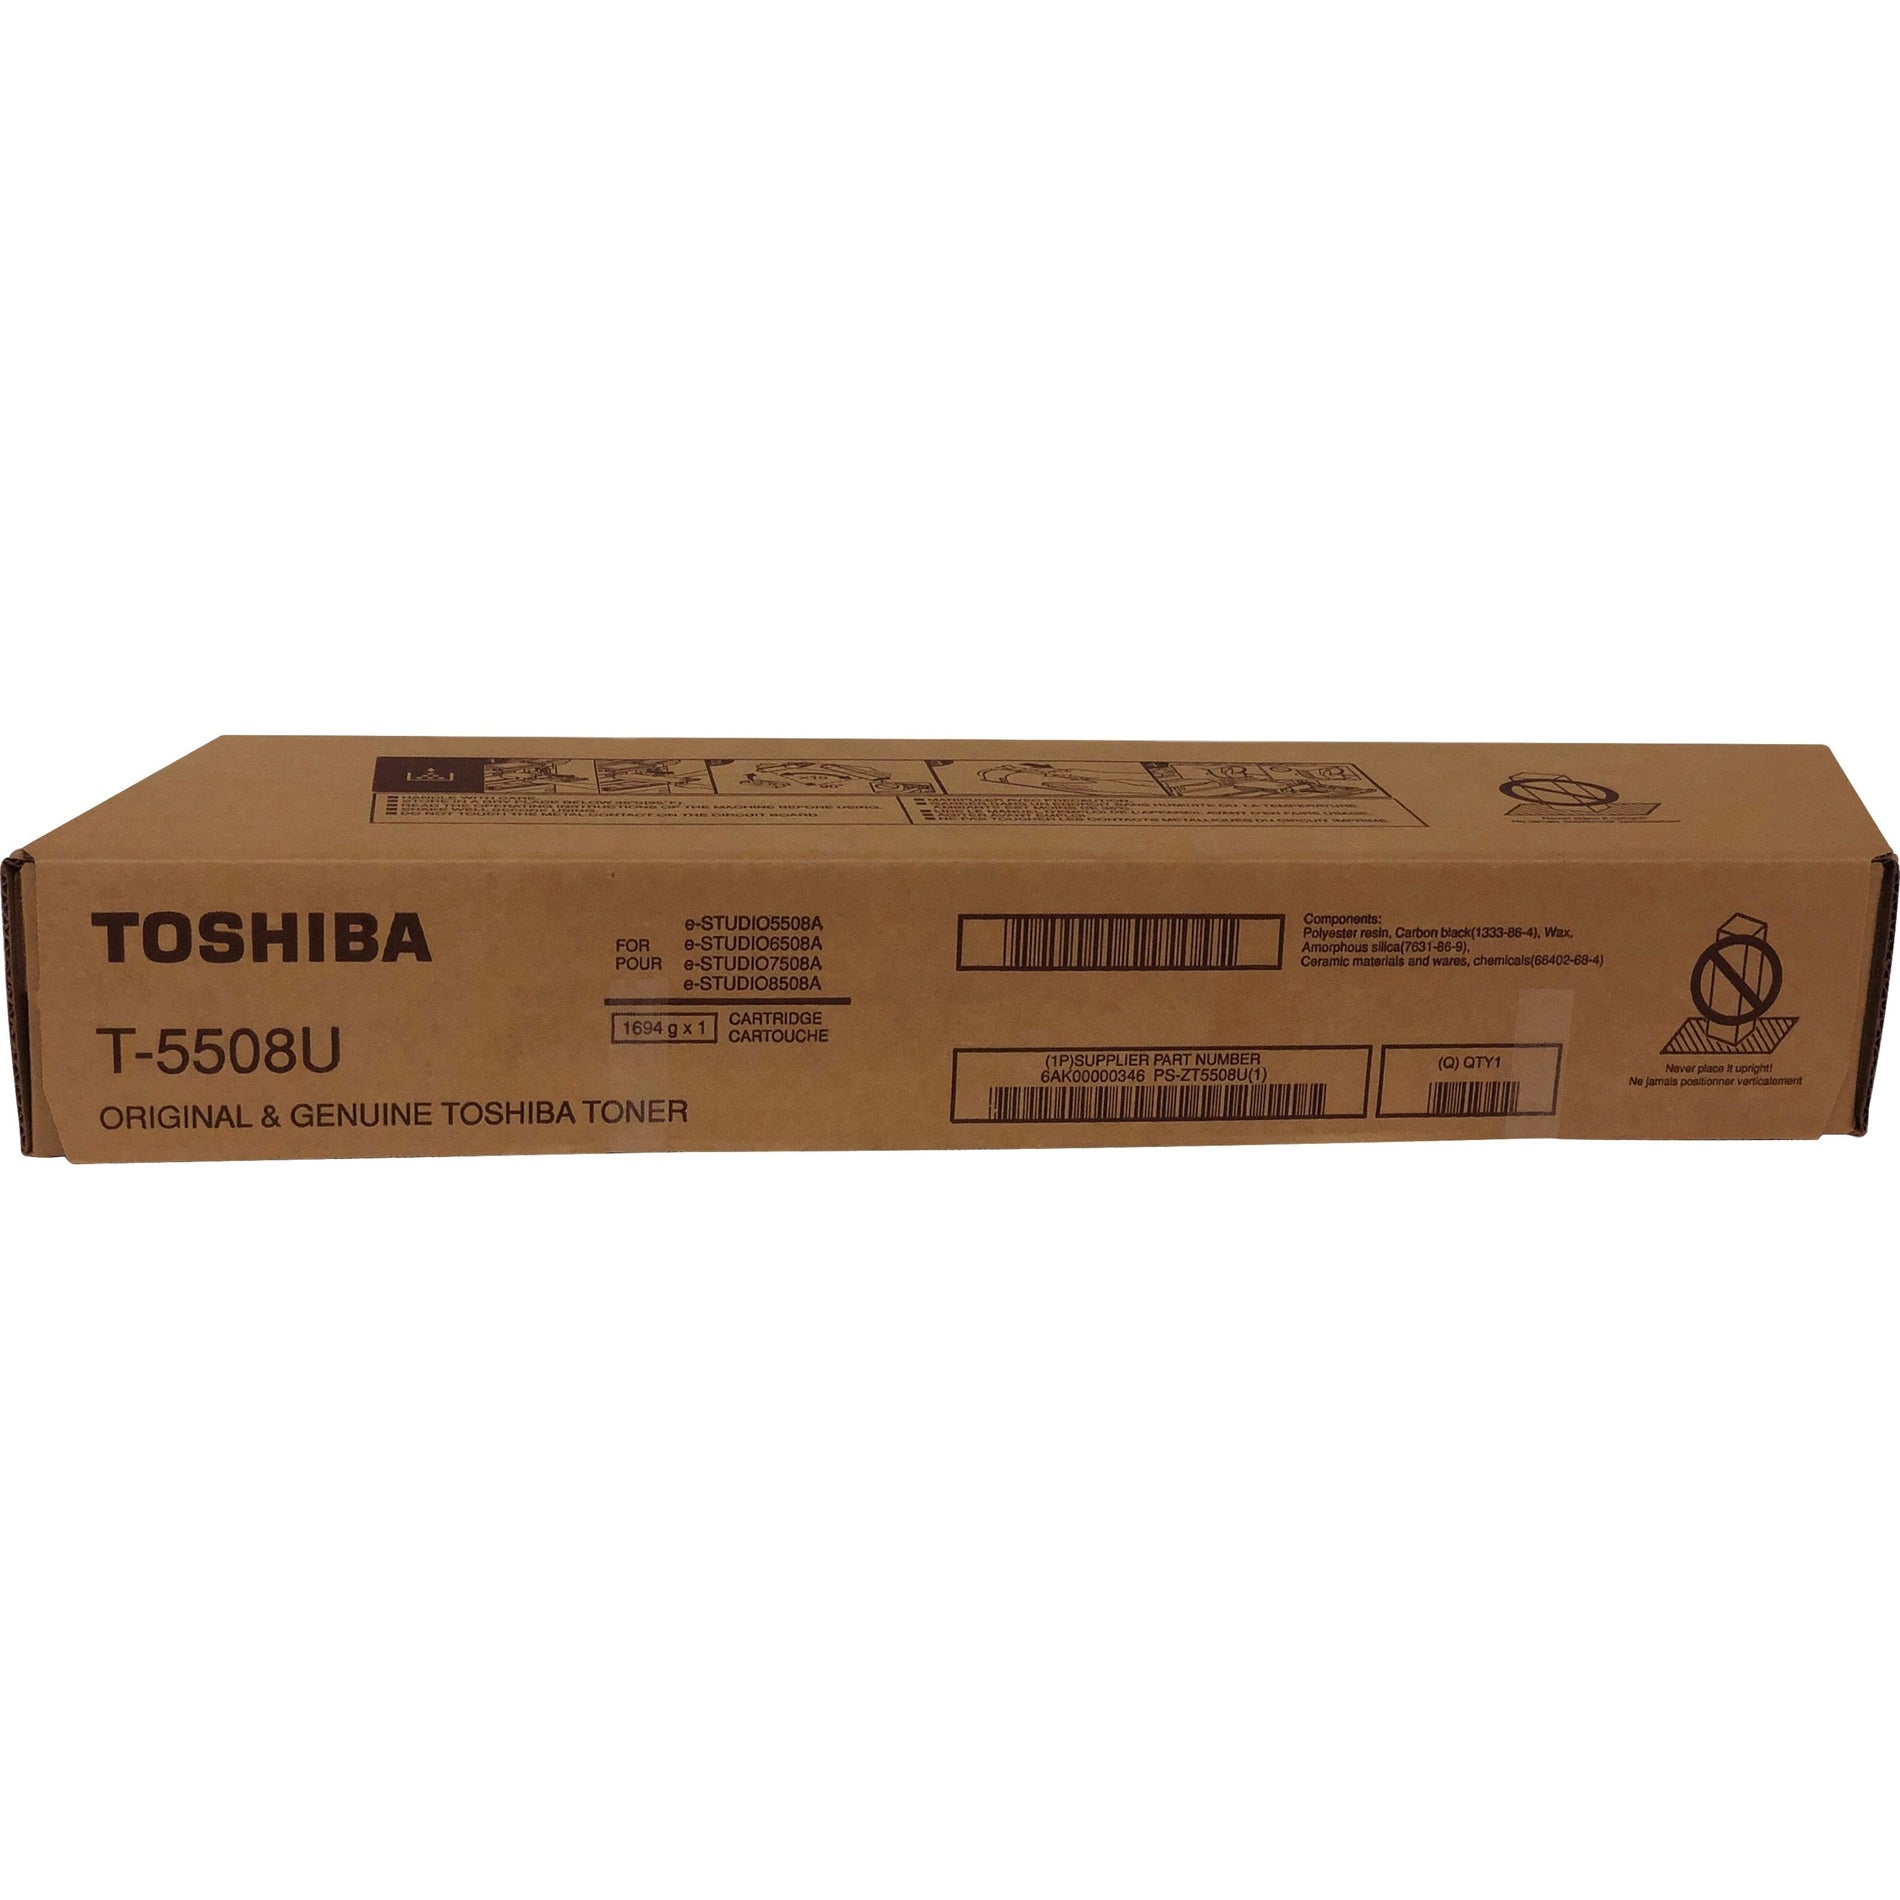 Toshiba T5508U E-Studio 5508A/6508A Original Laser Toner Cartridge, Black - 106600 Pages